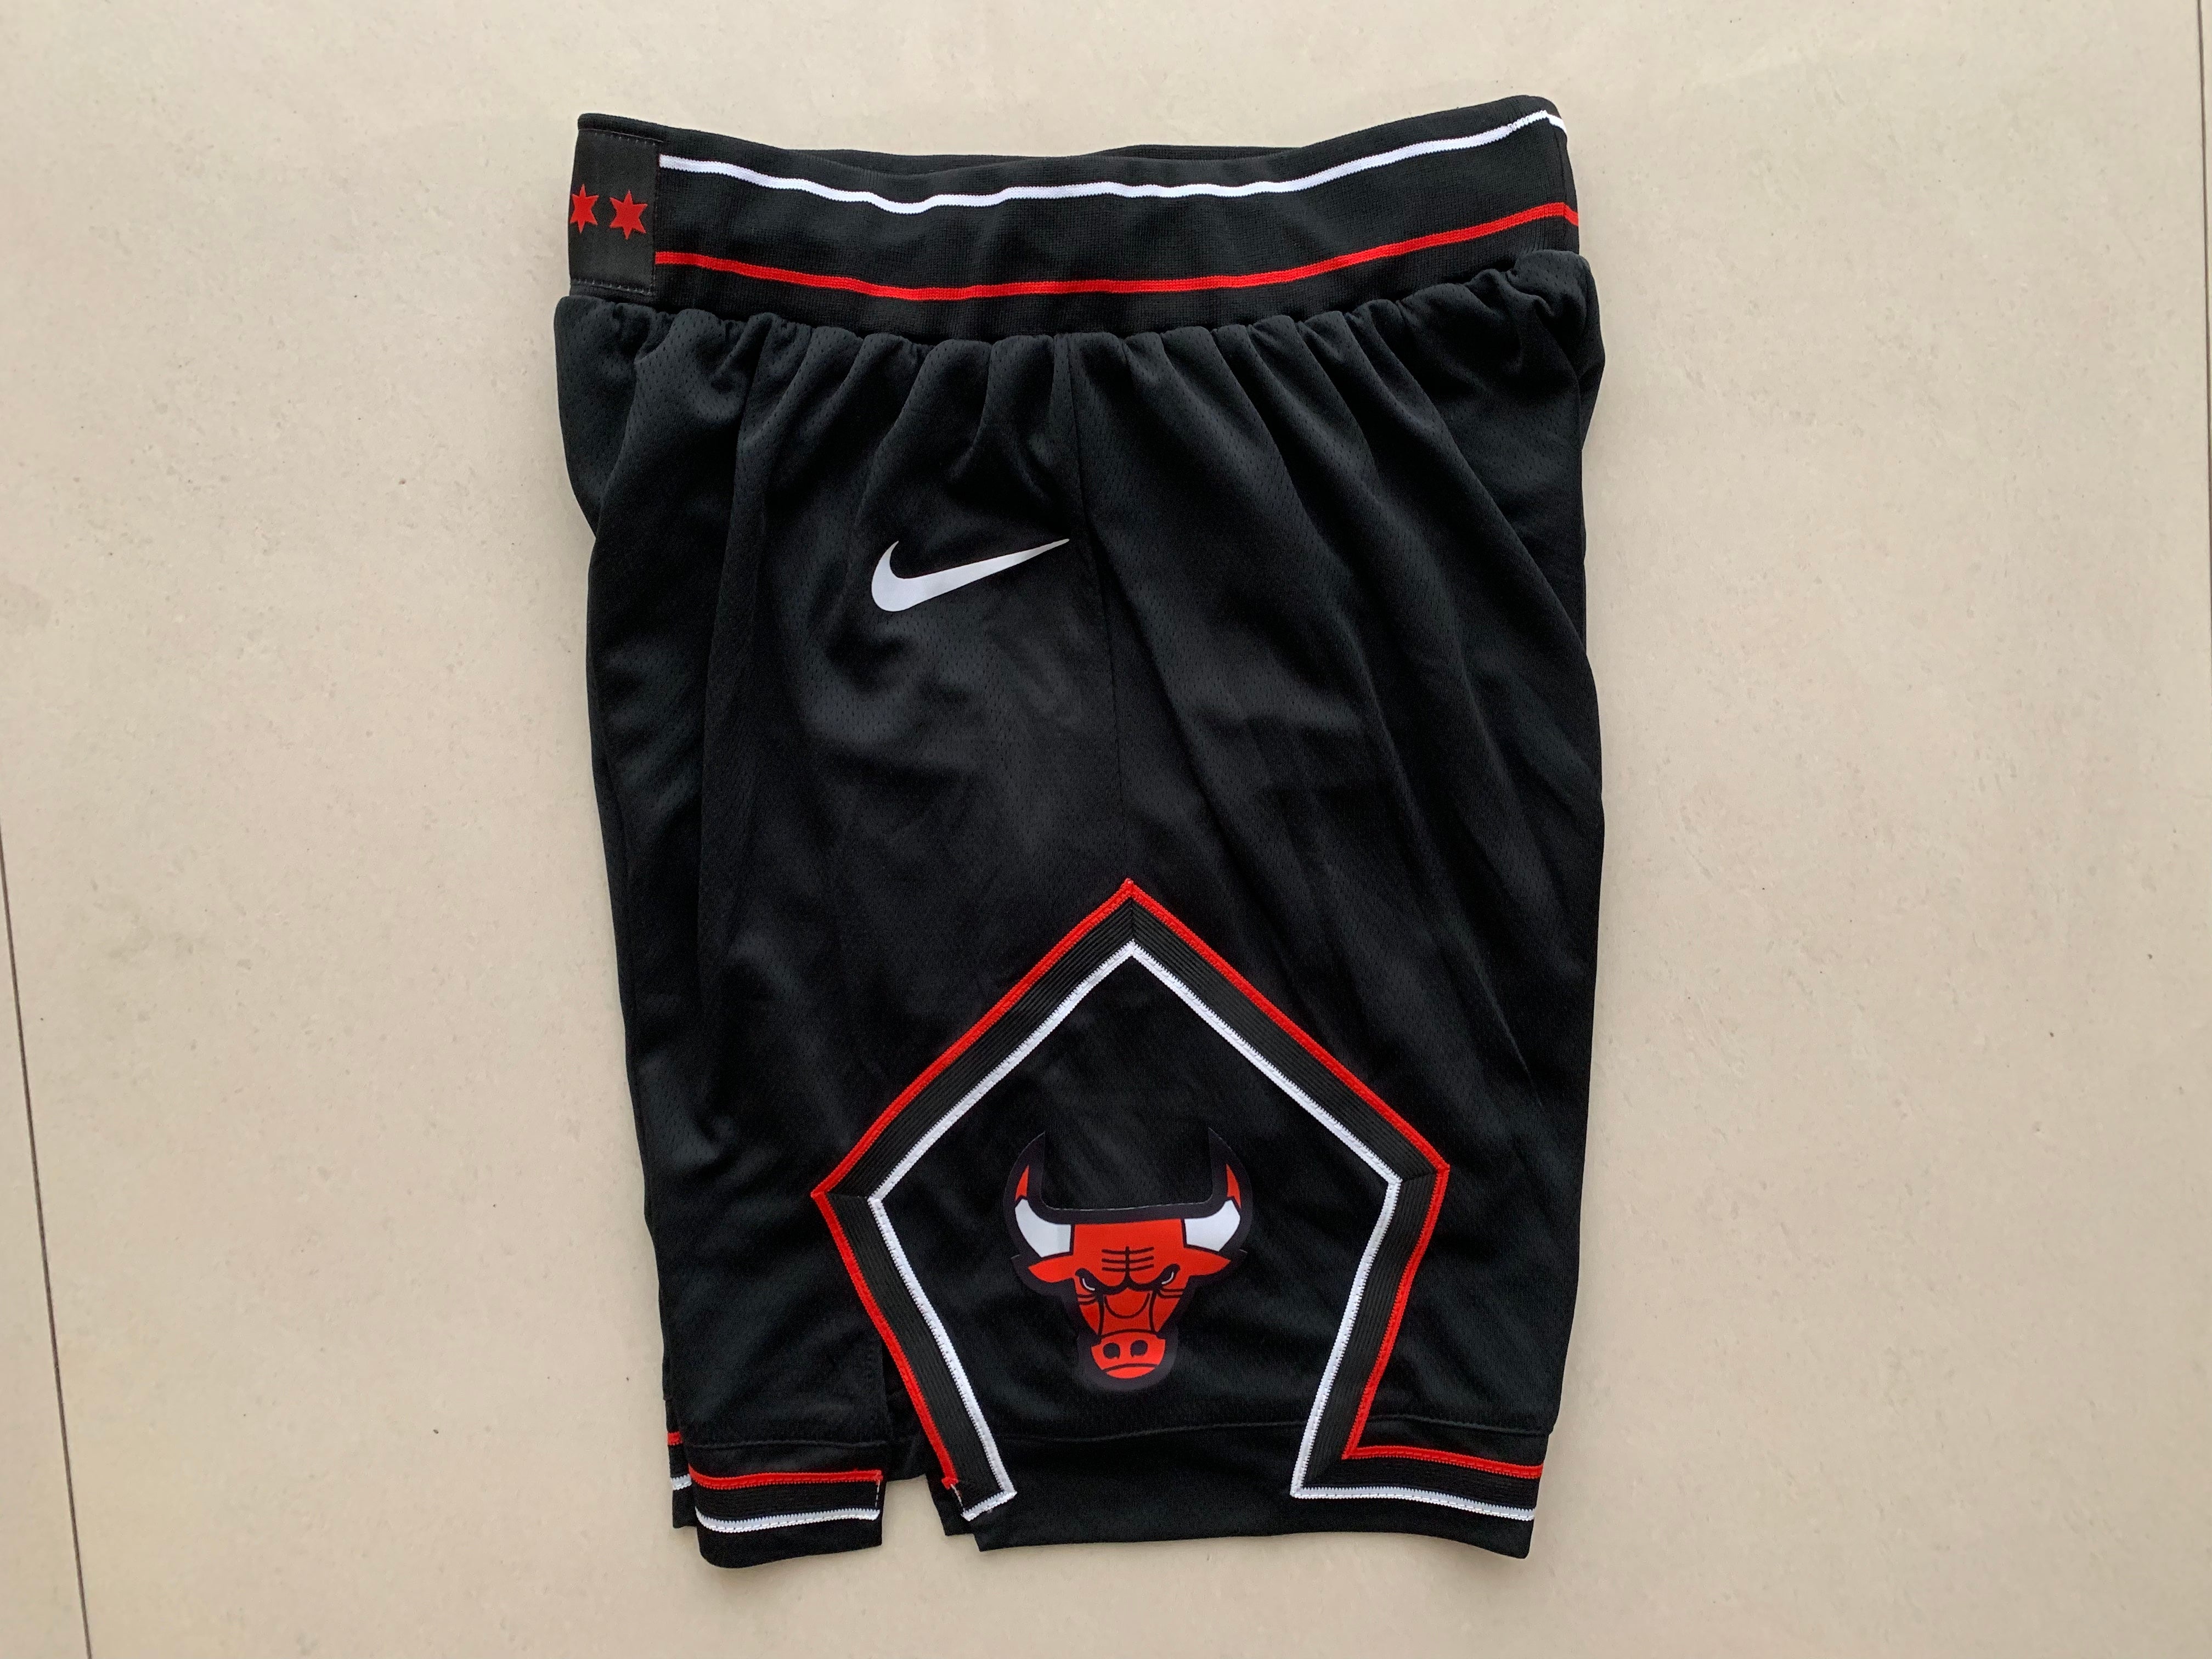 Bull black shorts